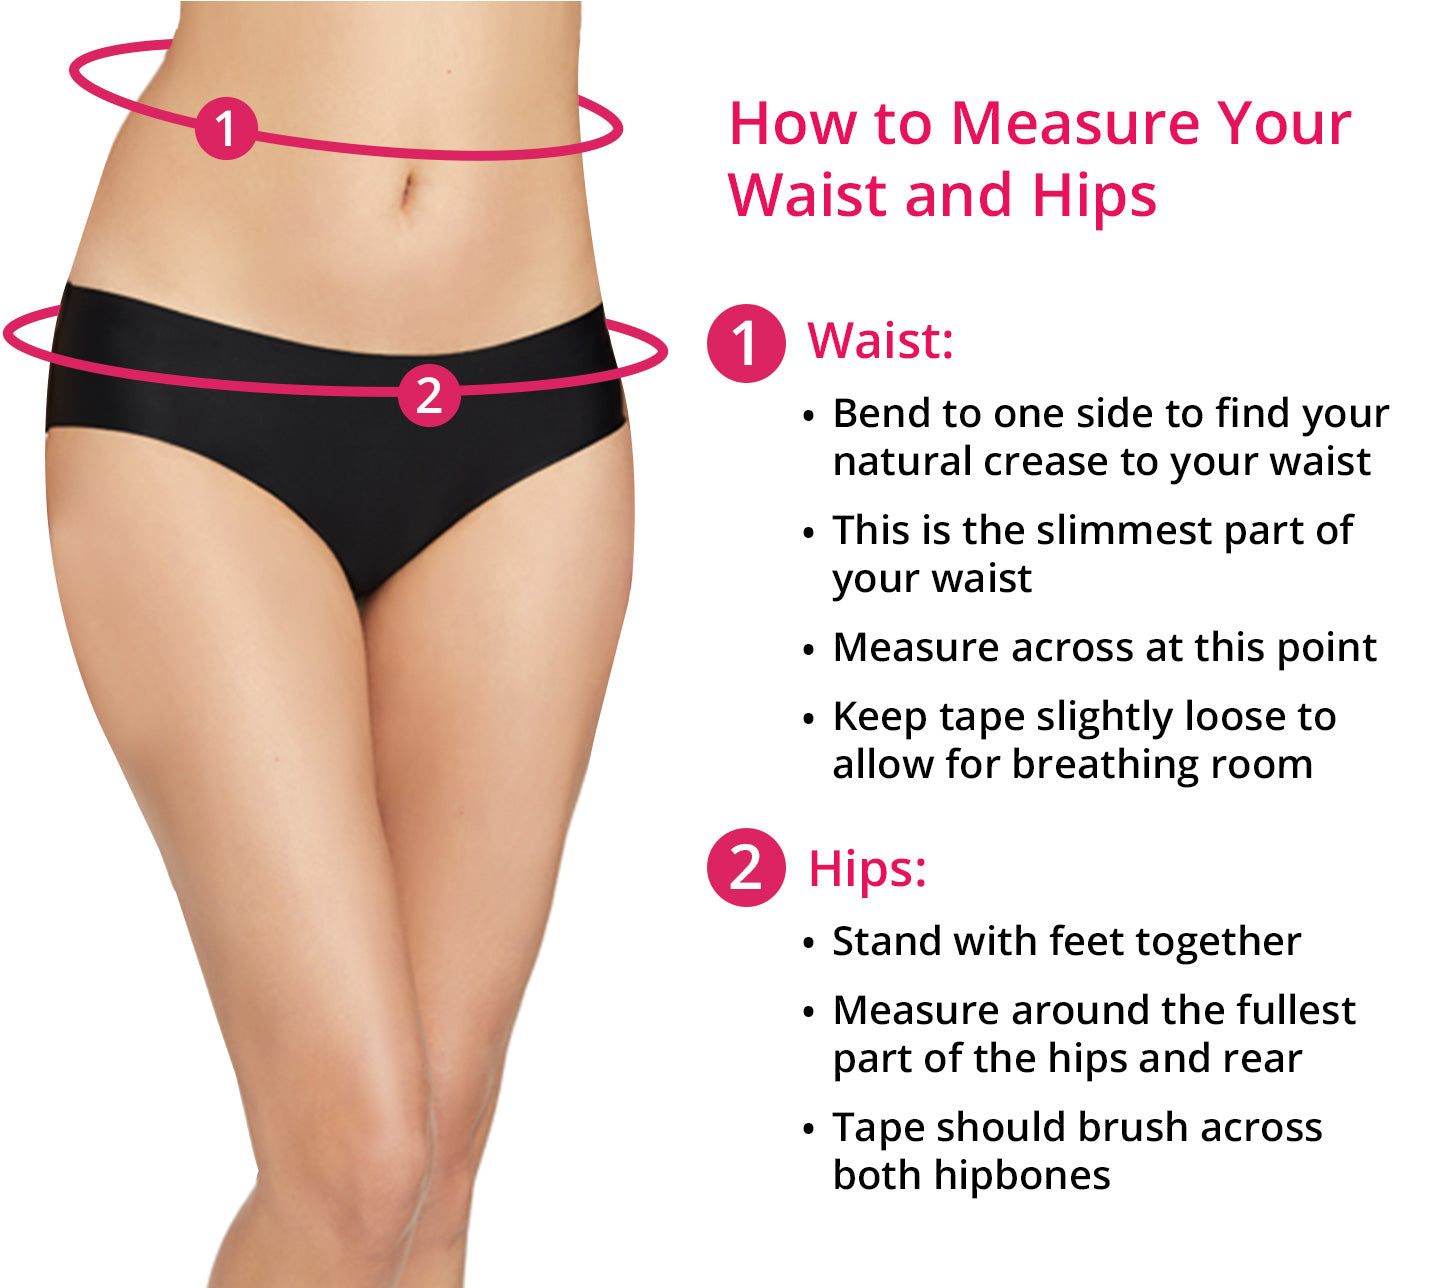 Women's Thongs Cotton Breathable Panties Bikini Underwear 5 Pack